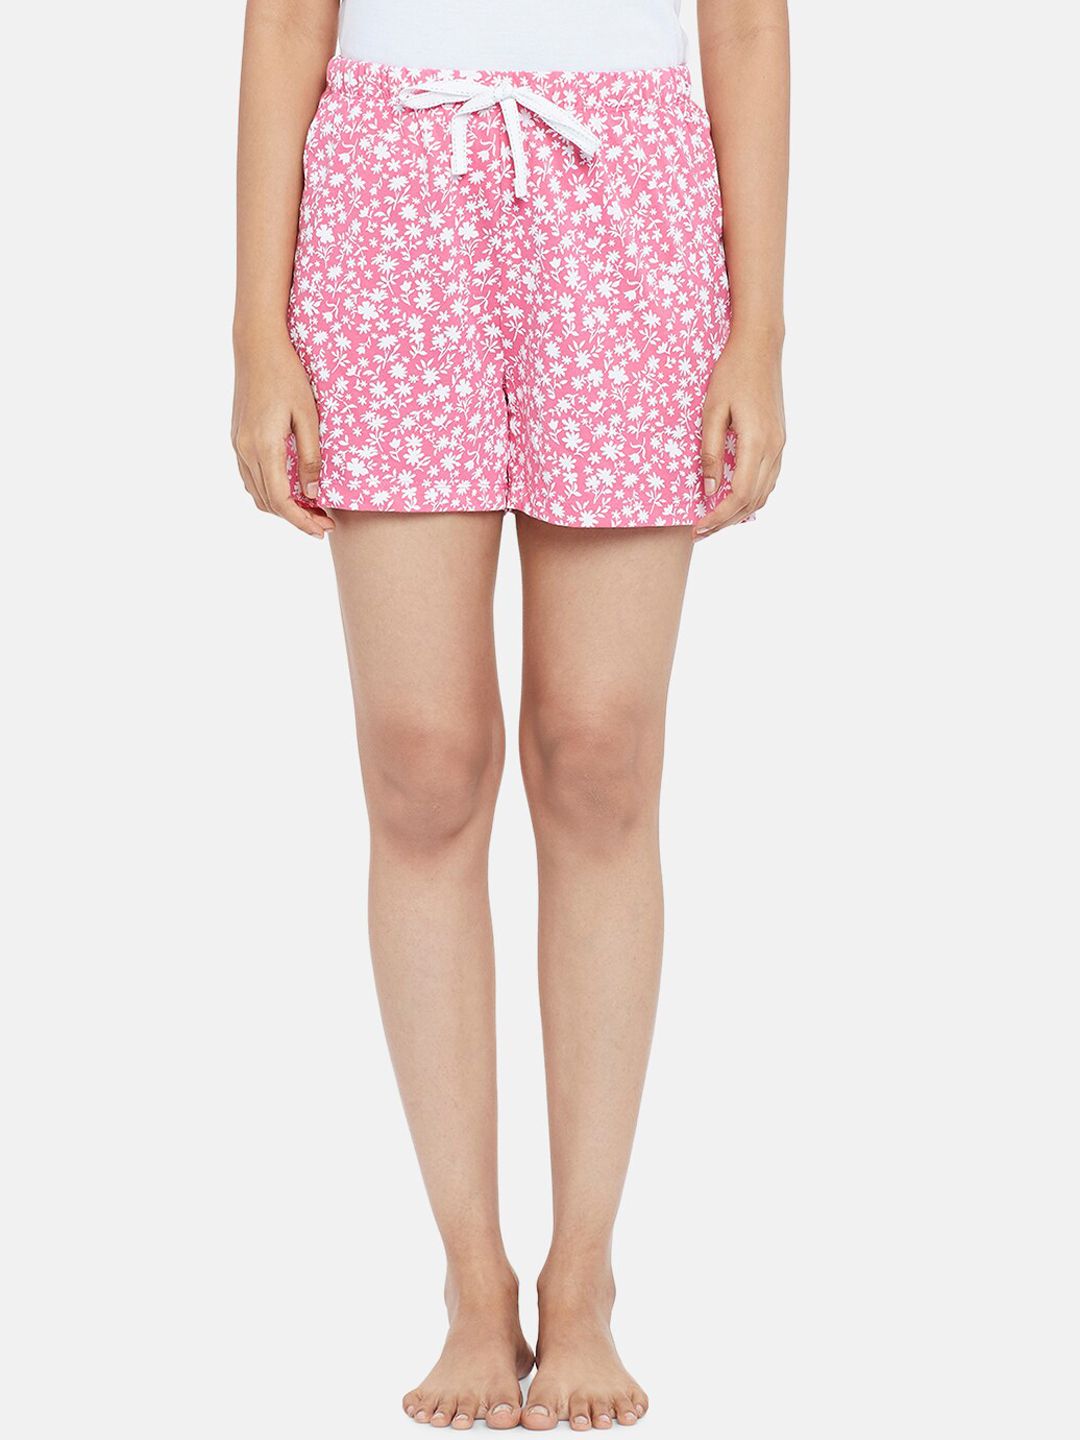 Dreamz by Pantaloons Women Pink Floral Printed Regular Shorts Price in India